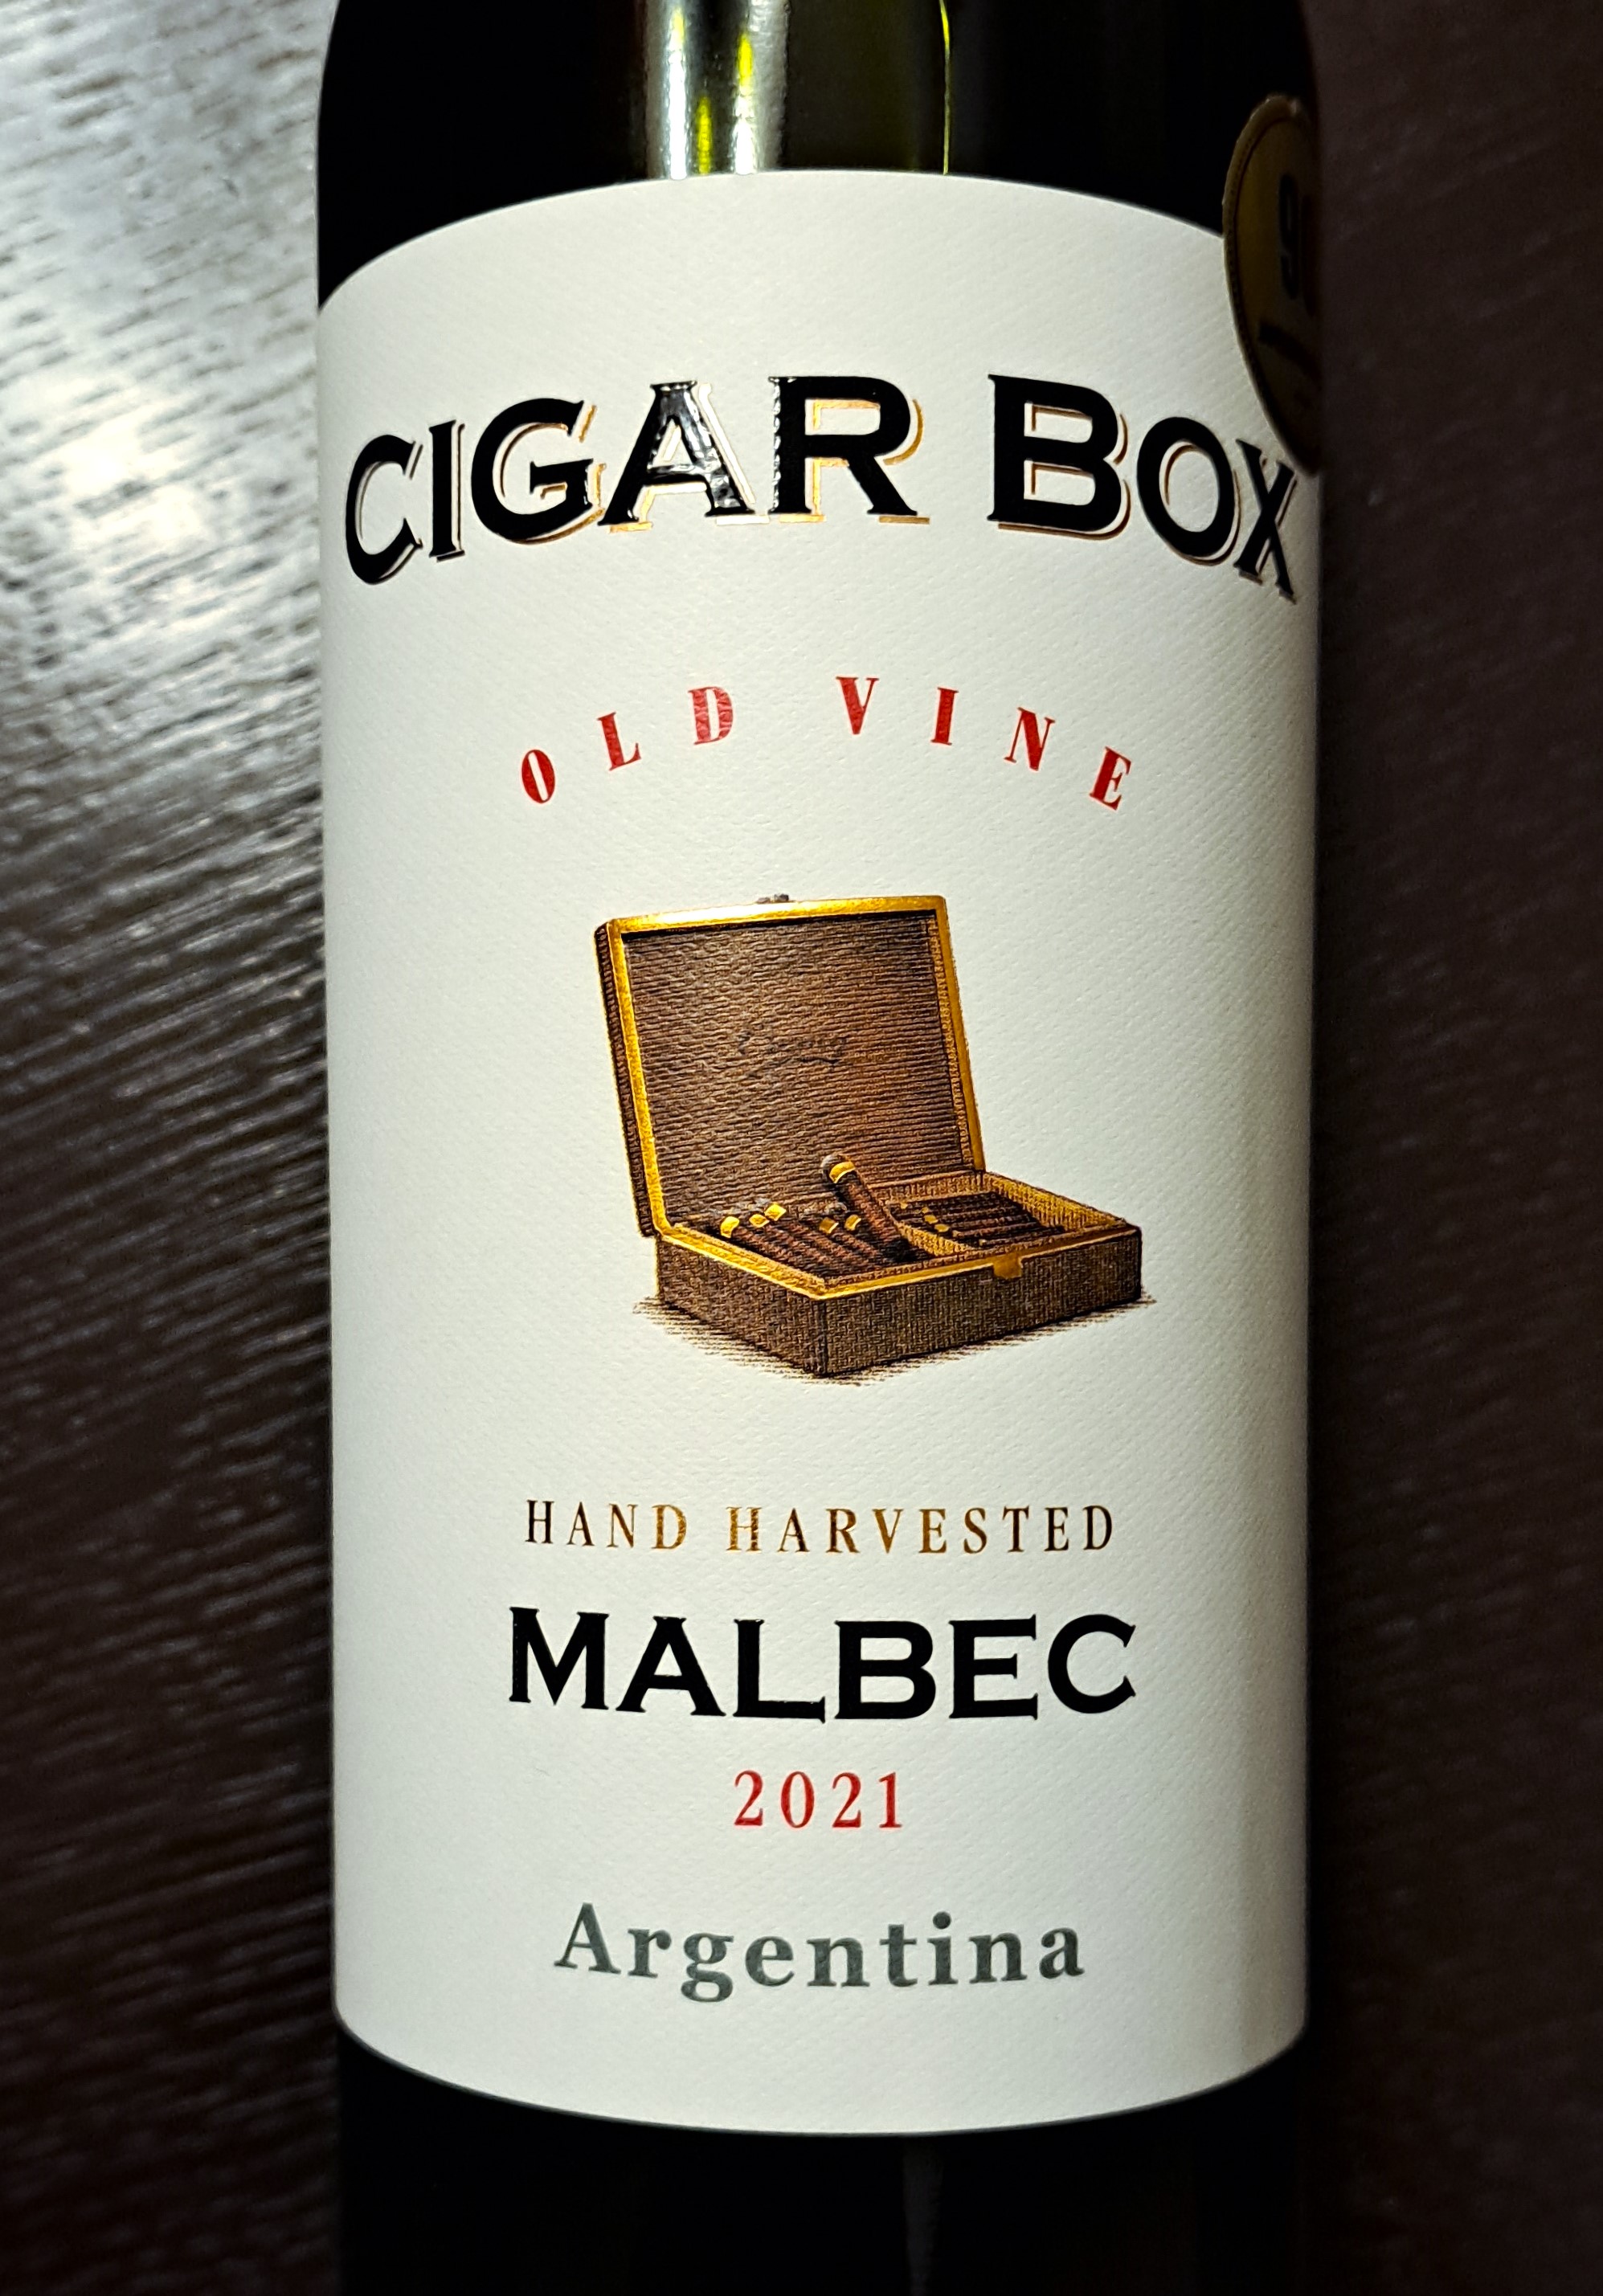 Cigar Box Old Vine Malbec Mendoza 2021, Dona Paula - Enostrada